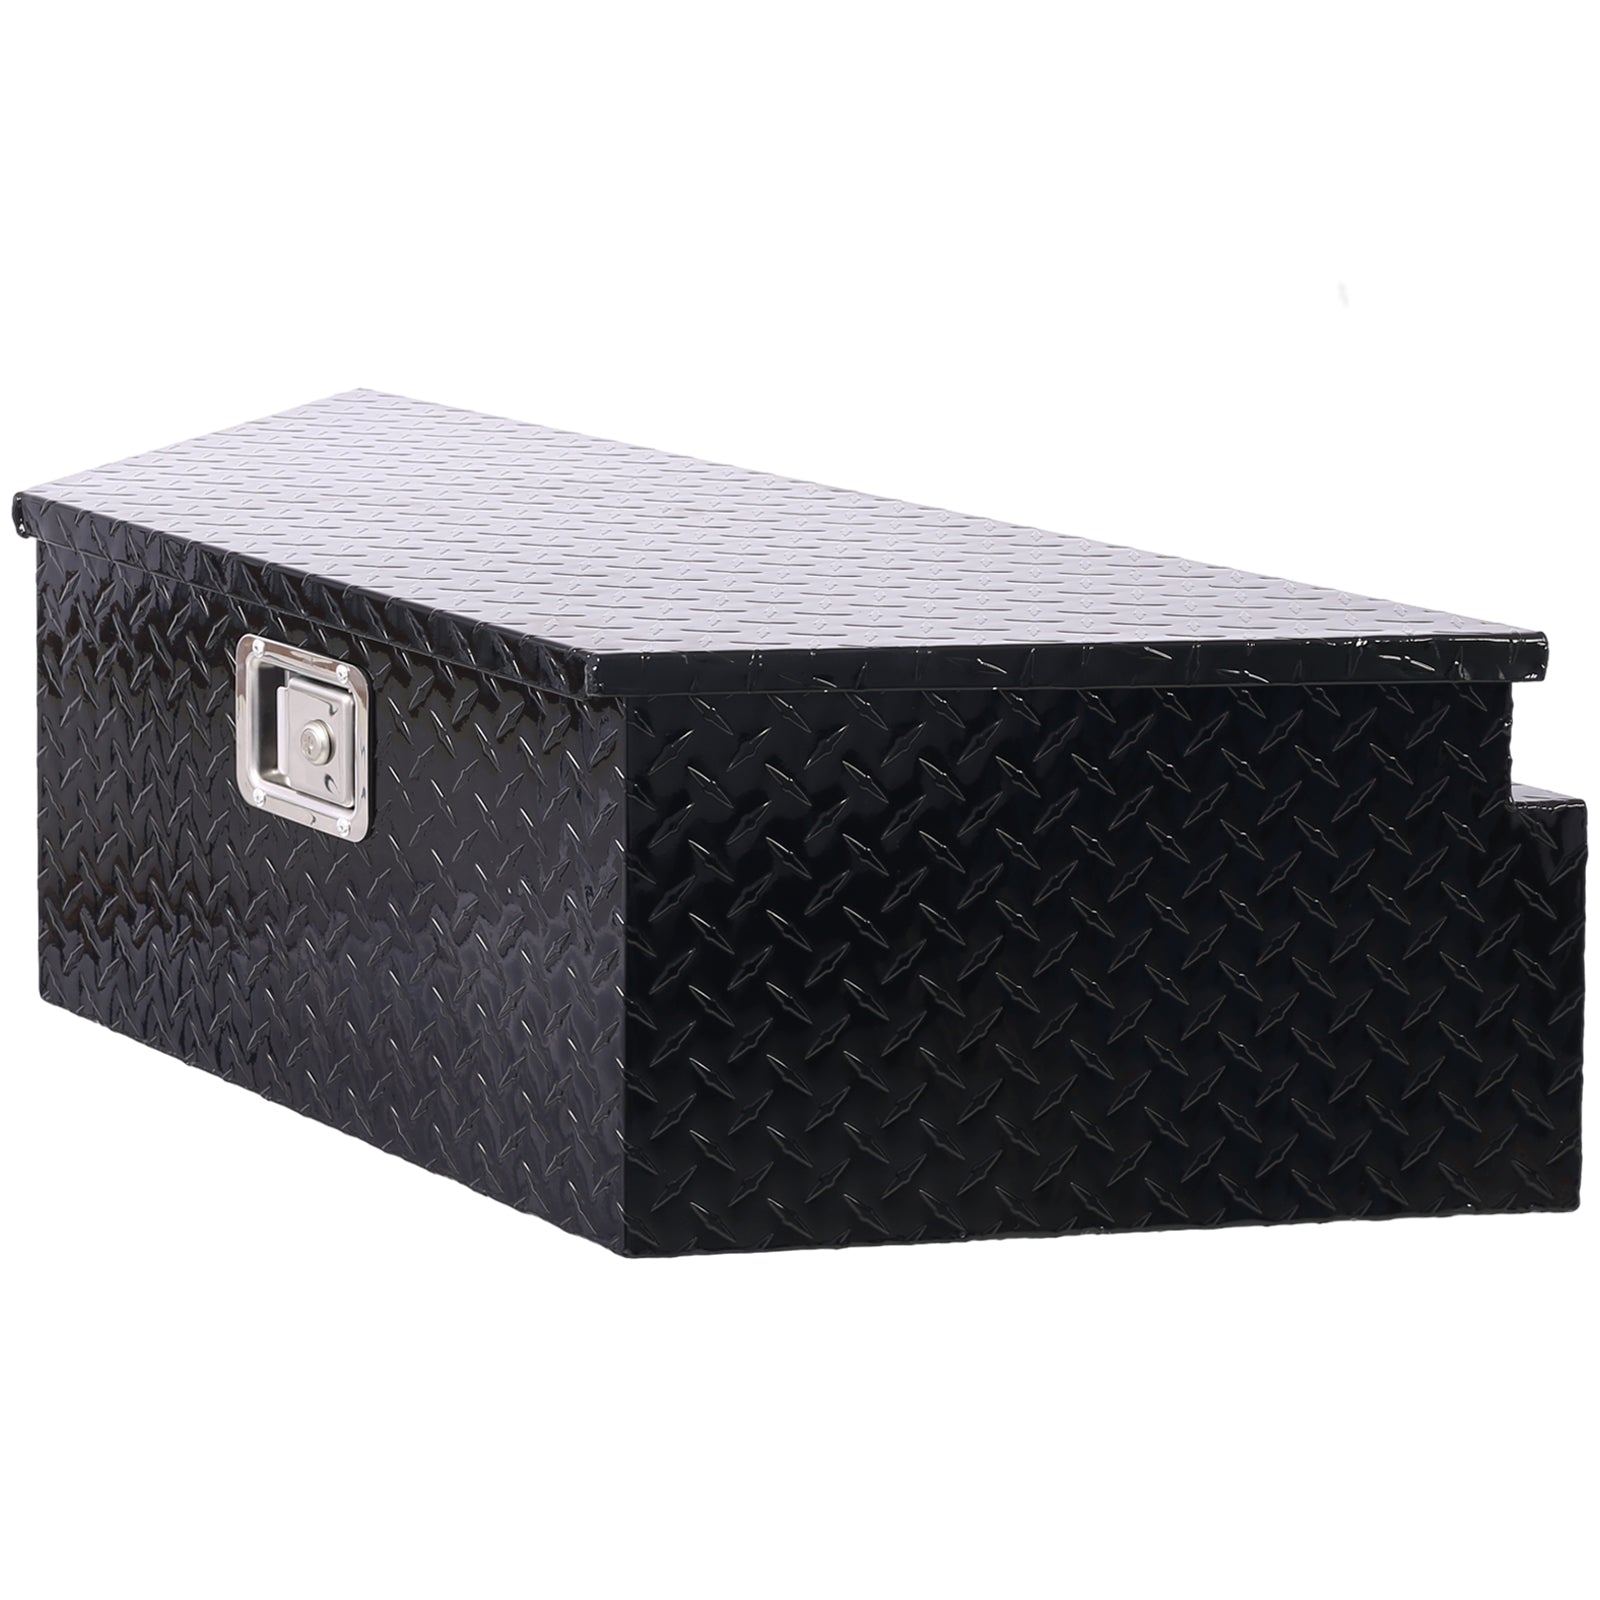 ZNTS 39inch Aluminum tool box,heavy duty truck bed tool box,outdoor trailer pickup tool box,RV W46581851